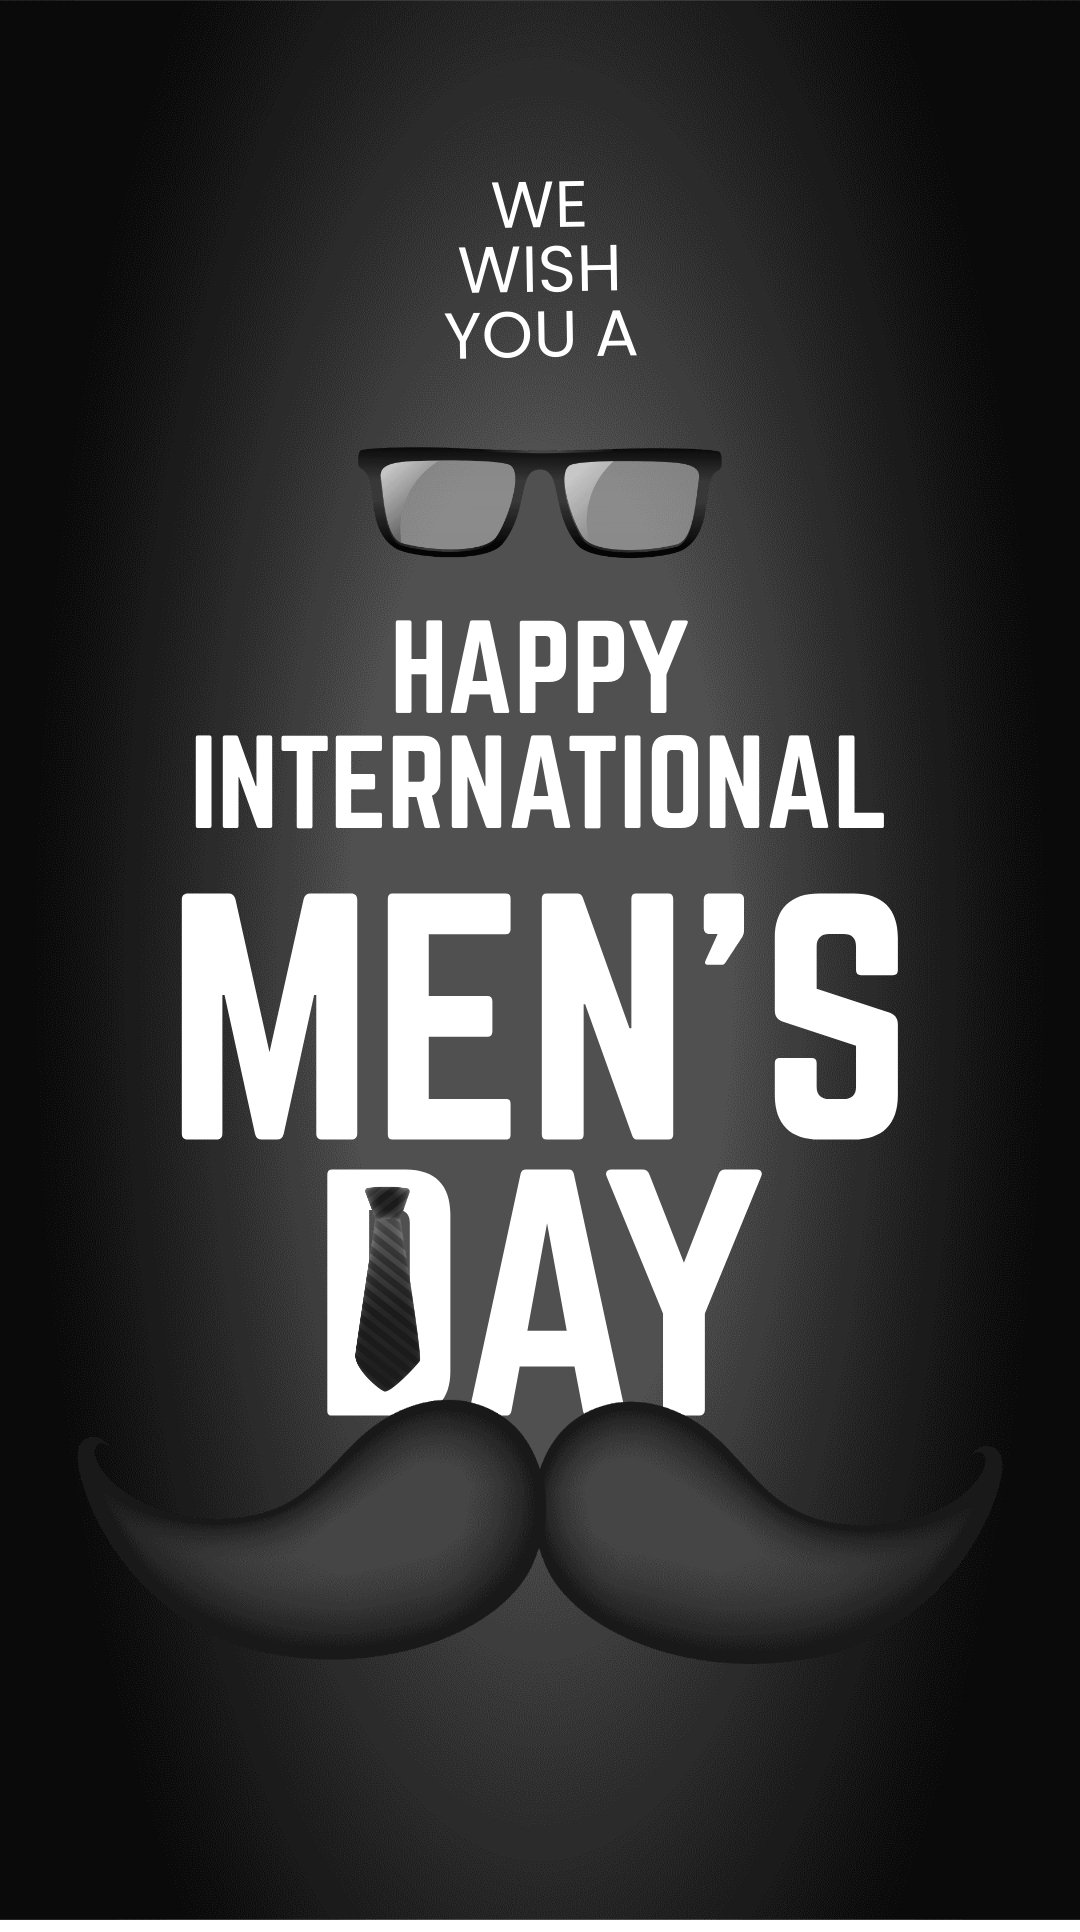 Free International Mens Day Wishes Whatsapp Post Template